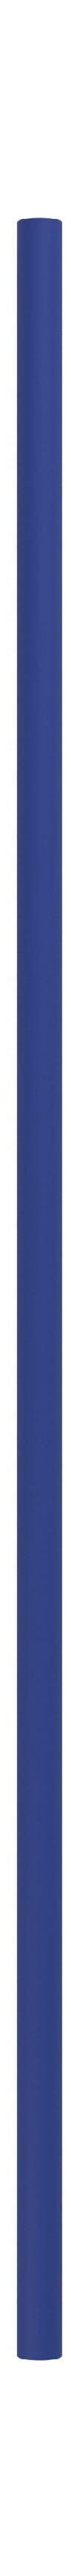 Moebe Shelving System/Wall Shelving Leg 85 Cm, Deep Blue